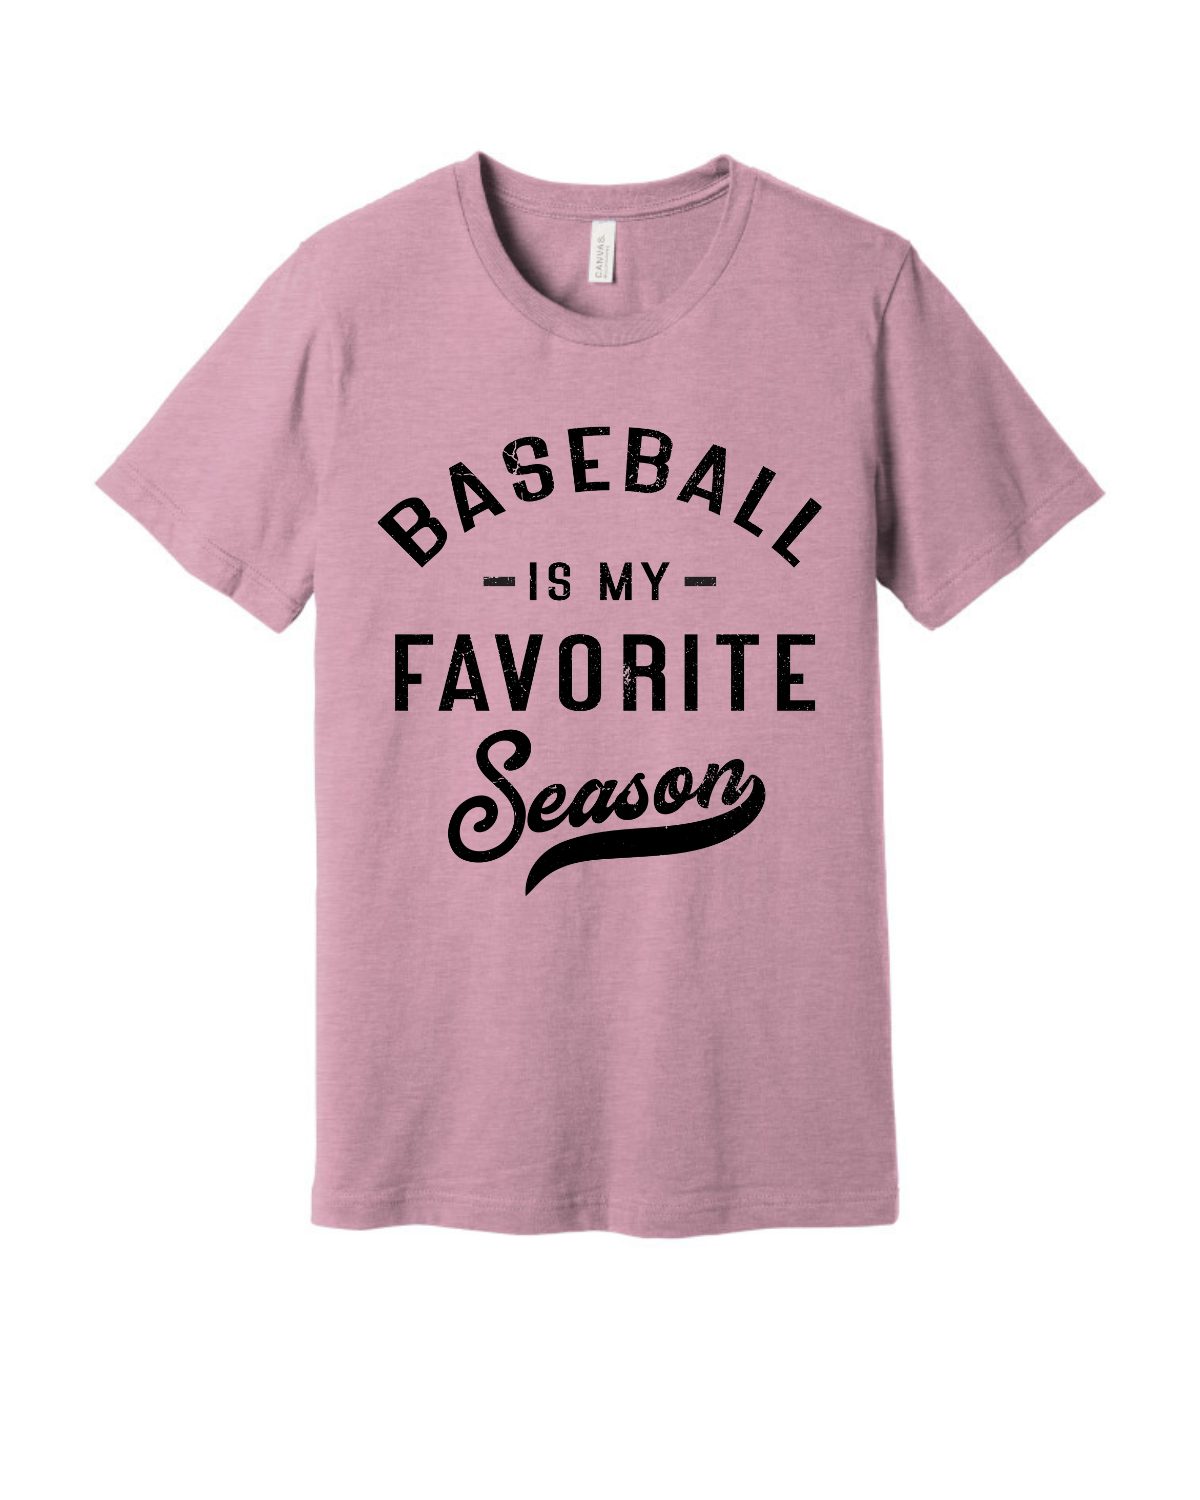 Baseball Is My Favorite Season Tee